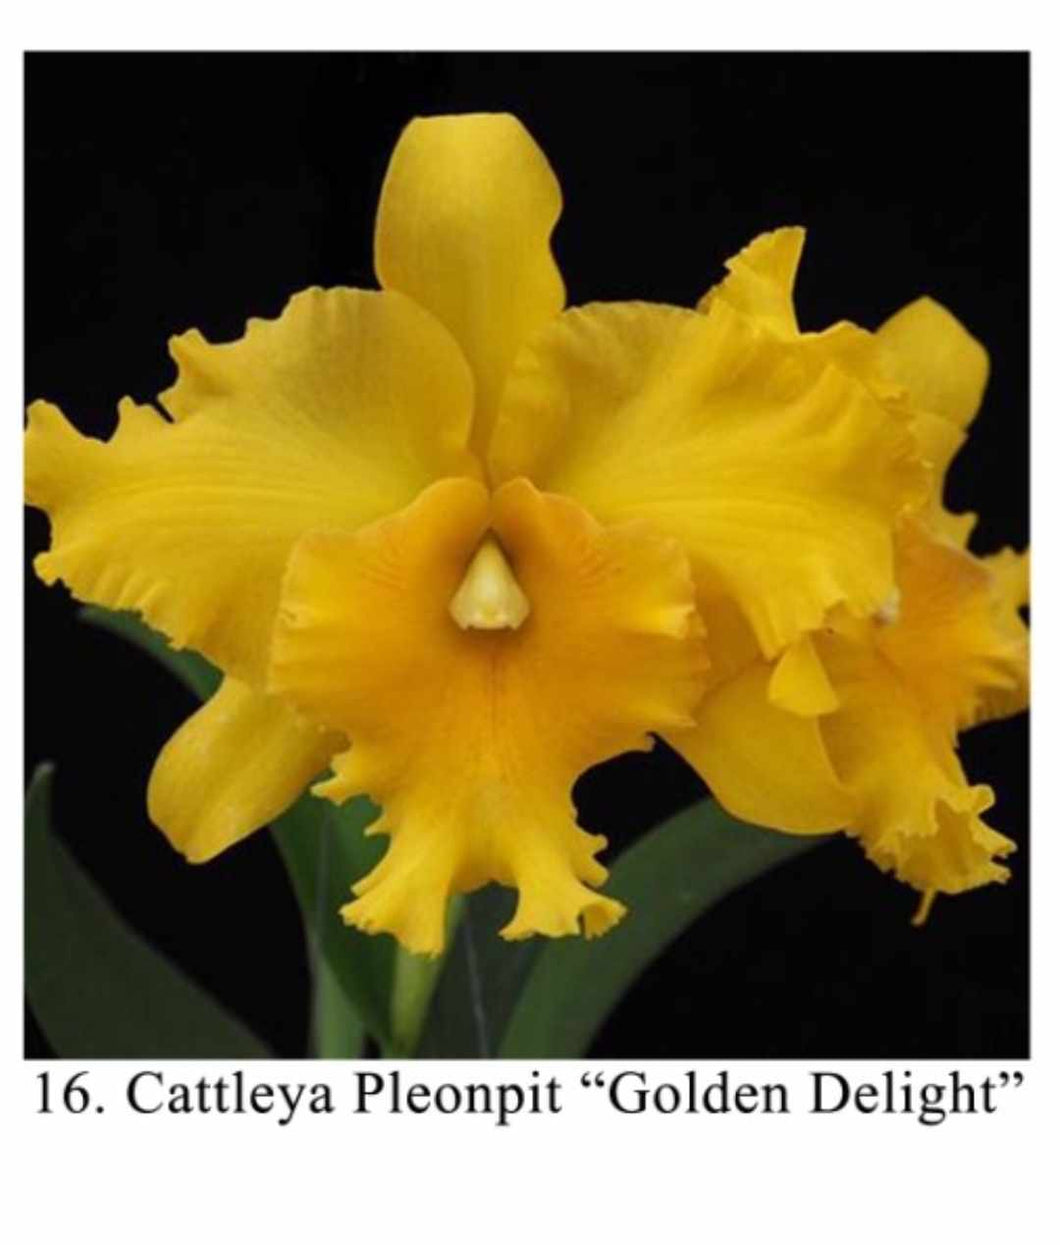 Cattleya Pleonpit “Golden Delight” - TAIWAN